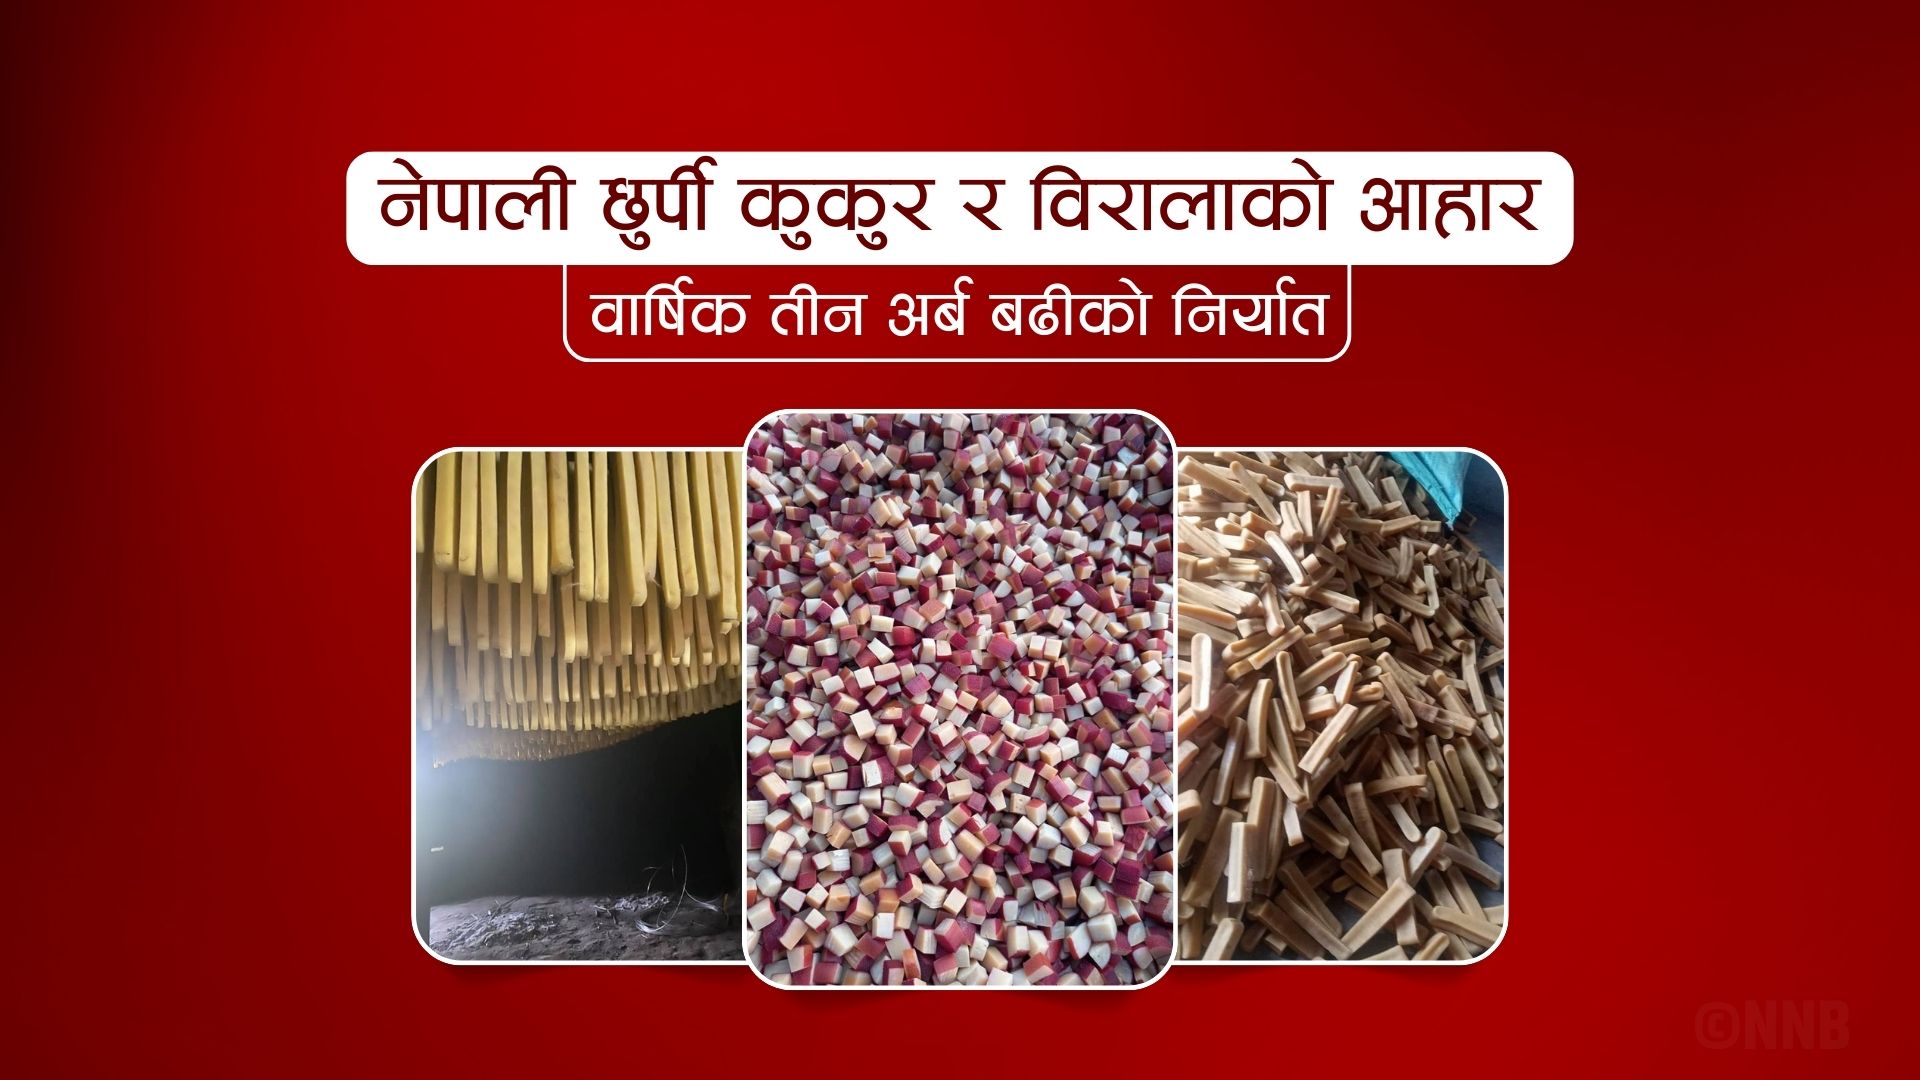 नेपाली छुर्पी कुकुर र विरालाको आहार, वार्षिक तीन अर्ब बढीको निर्यात